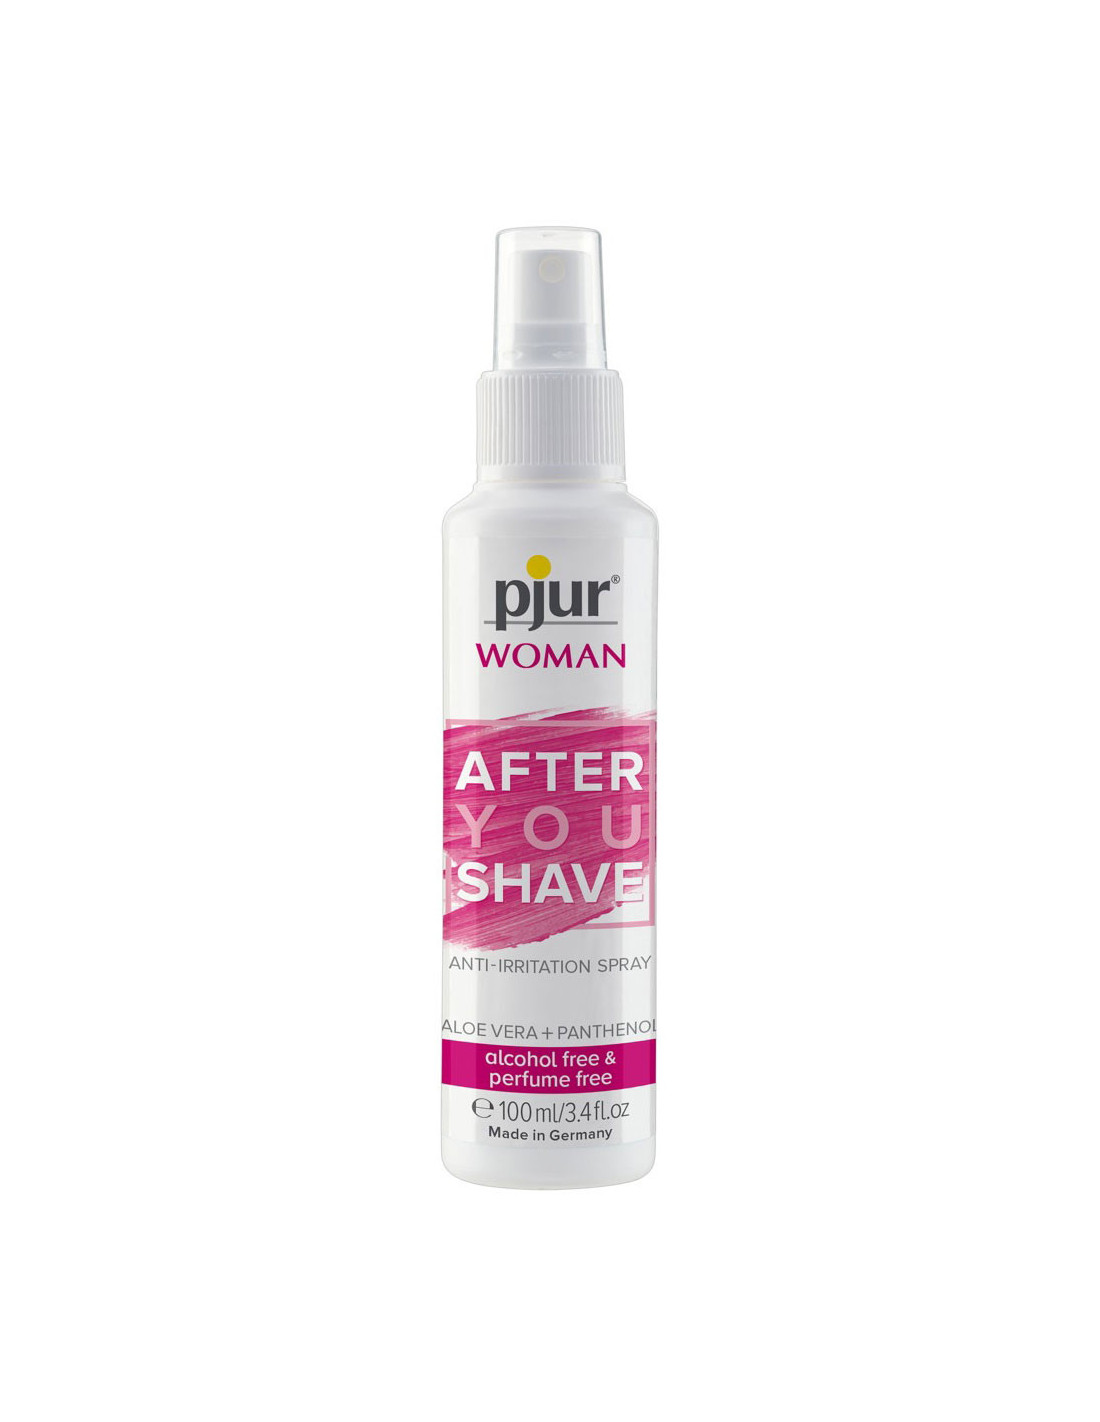 PJur Spray apres-rasage Woman After You Shave VovicK0L